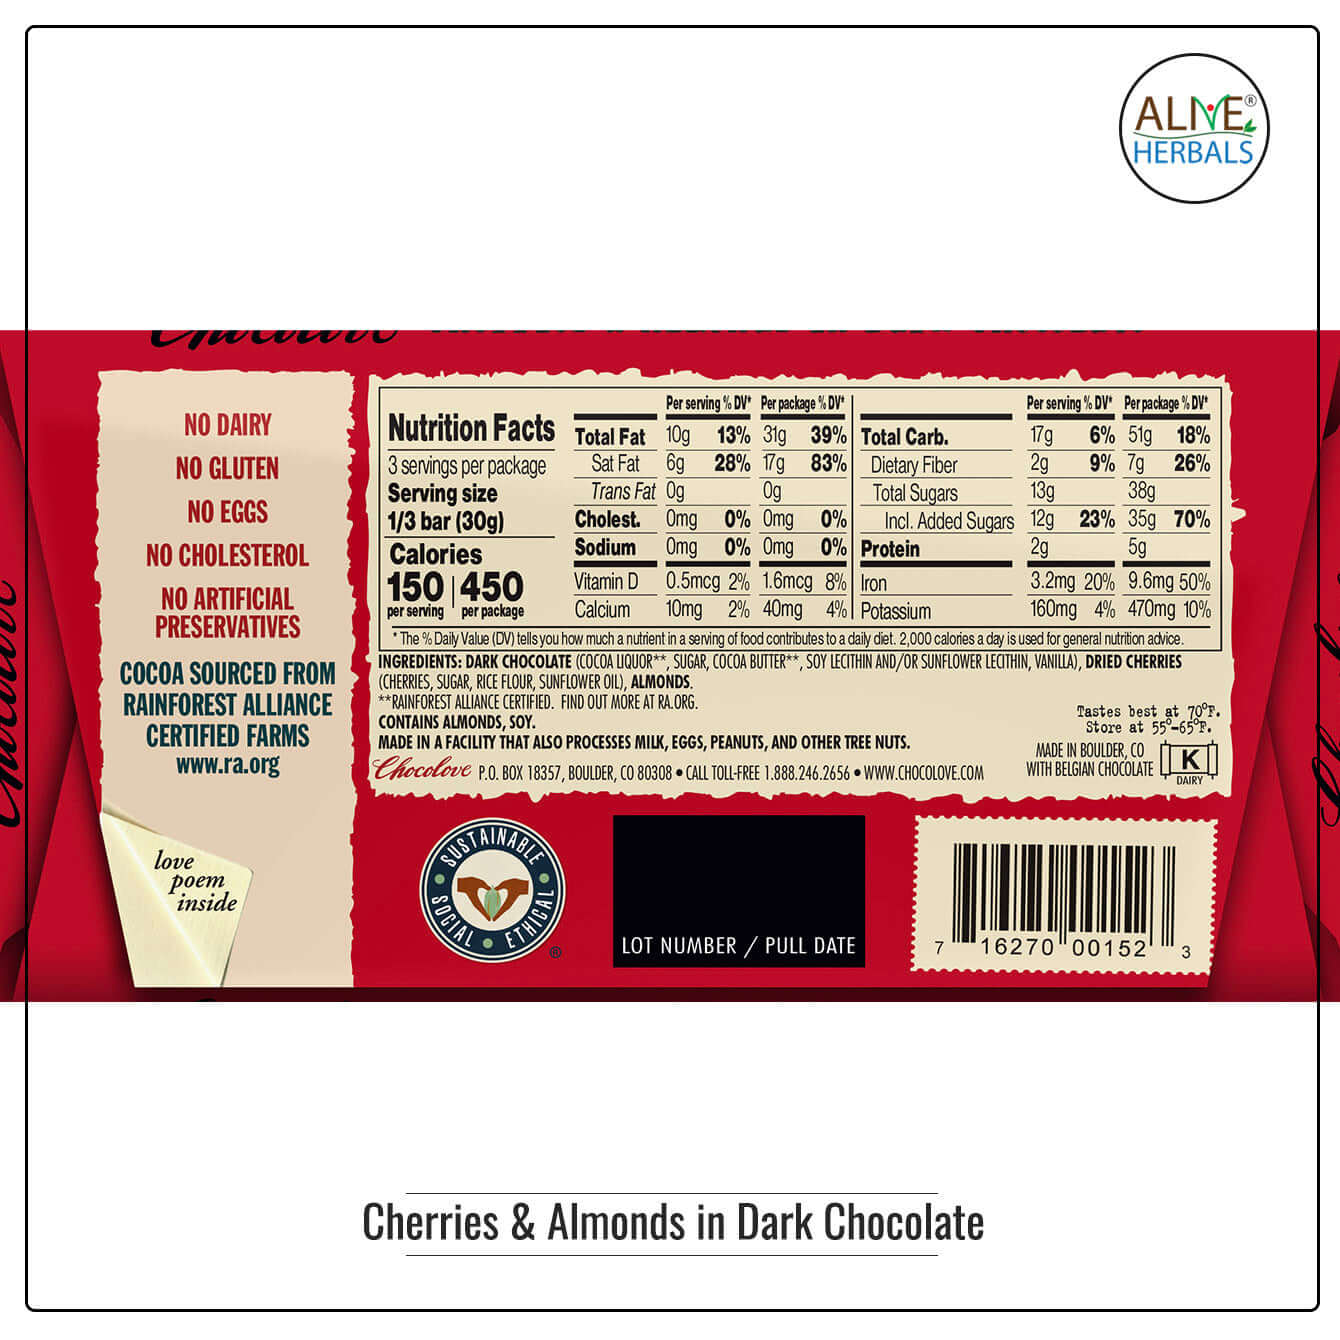 Cherries & Almonds in Dark Chocolate - Buy at Natural Food Store | Alive Herbals.